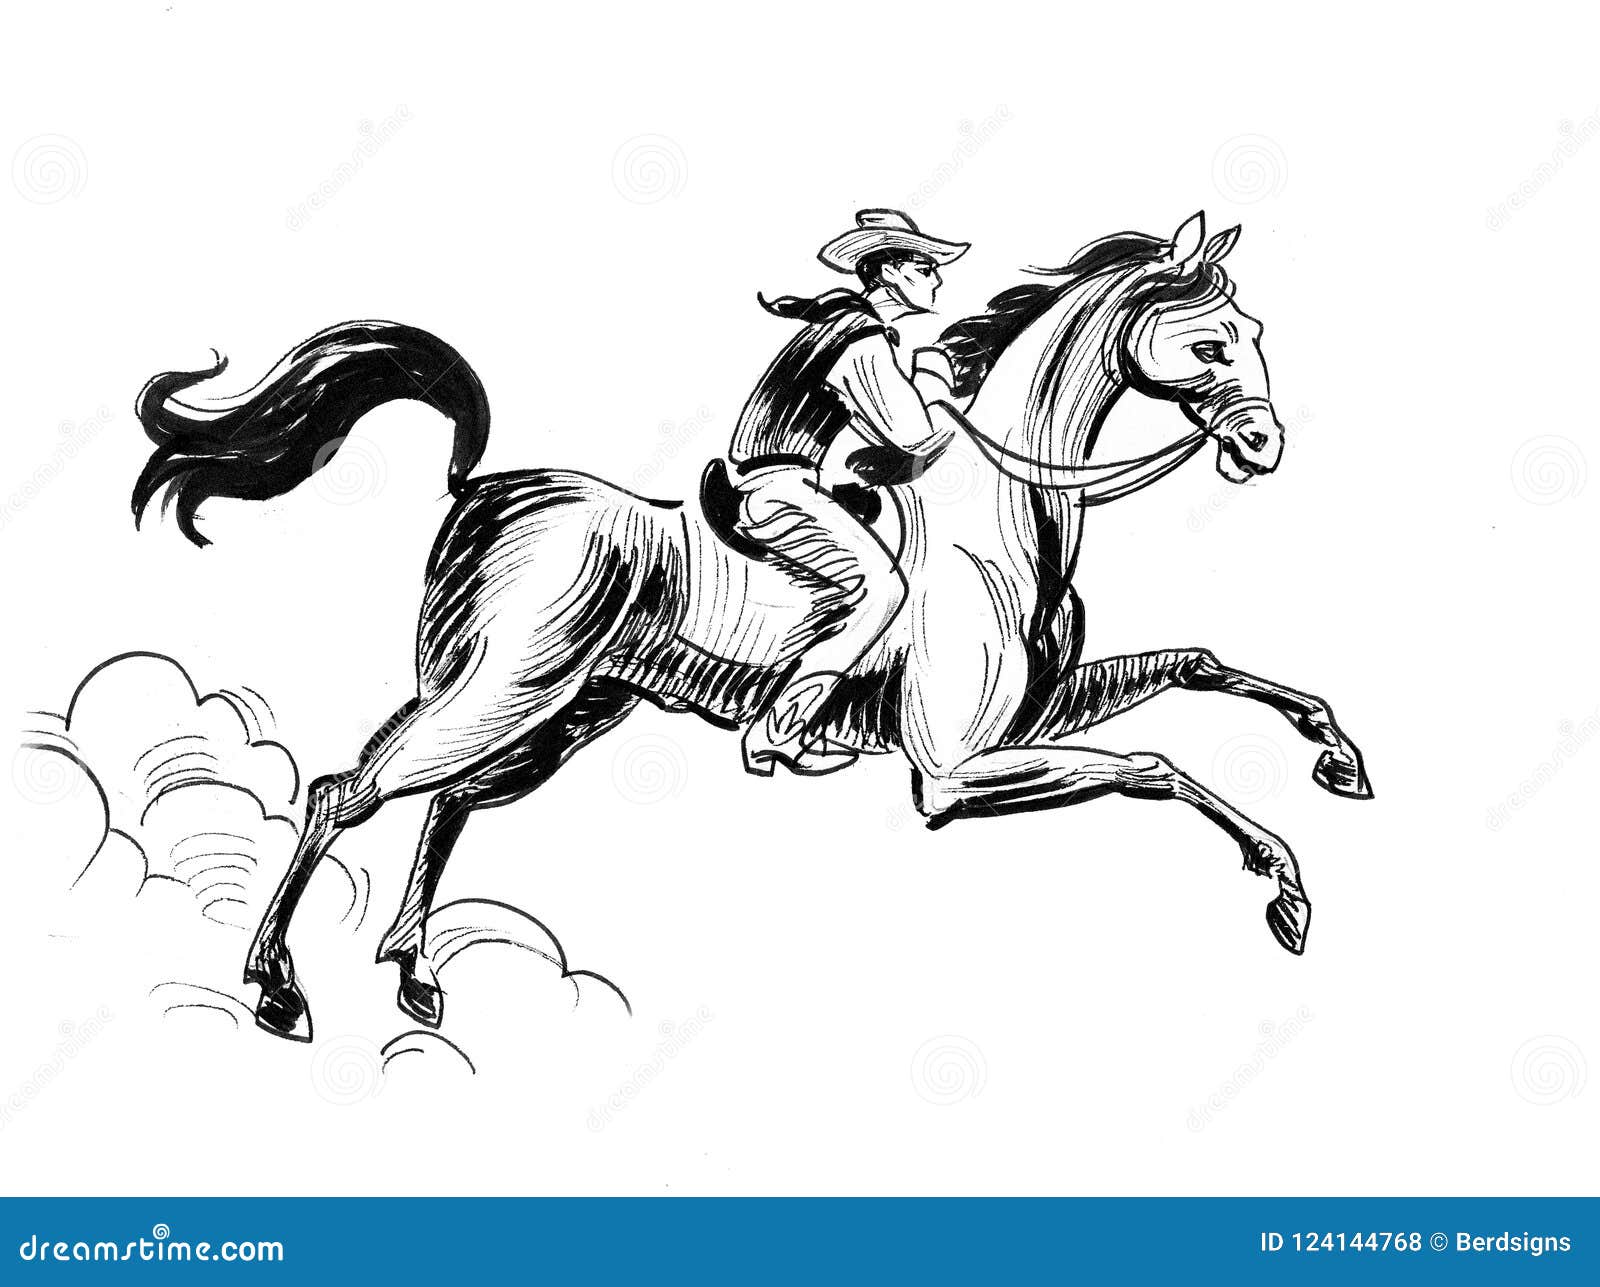 Cowboy riding a horse stock illustration. Illustration of